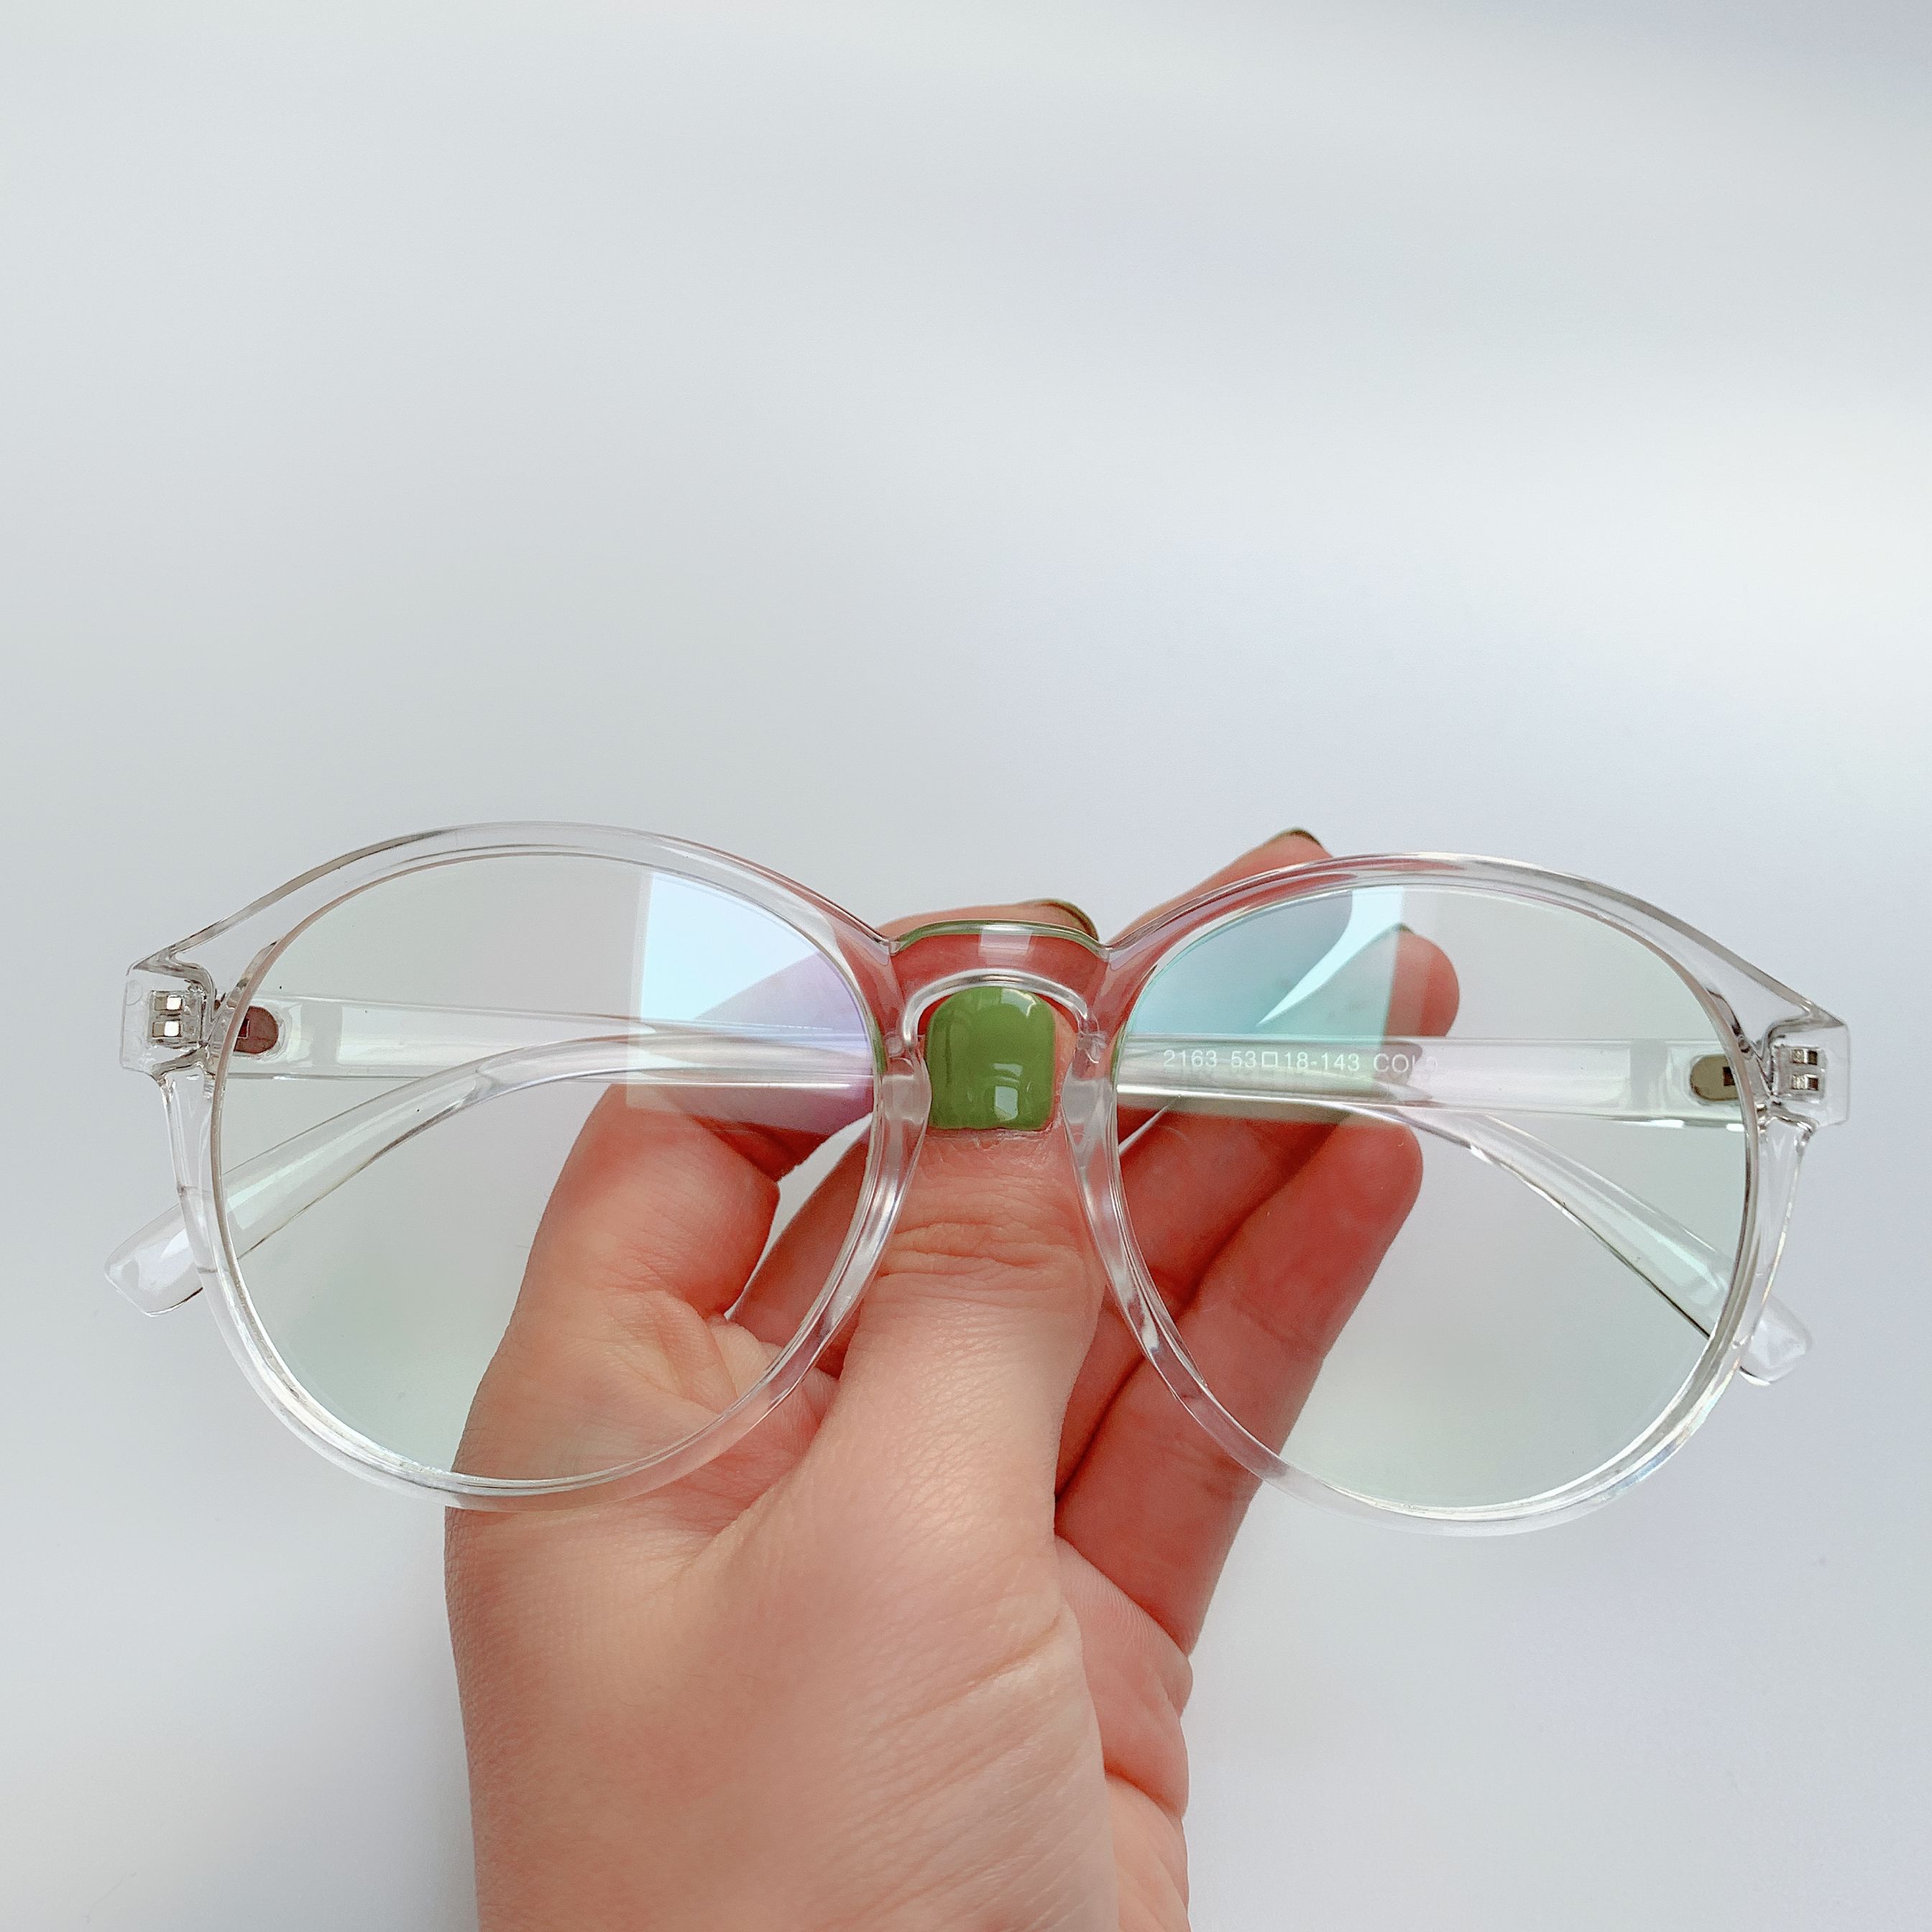 Retro Vintage Glasses Women Clear Lens Oval Nerd Glass Frame Attractive Party Eyewear Selfie Pose Lady Soild Glasses